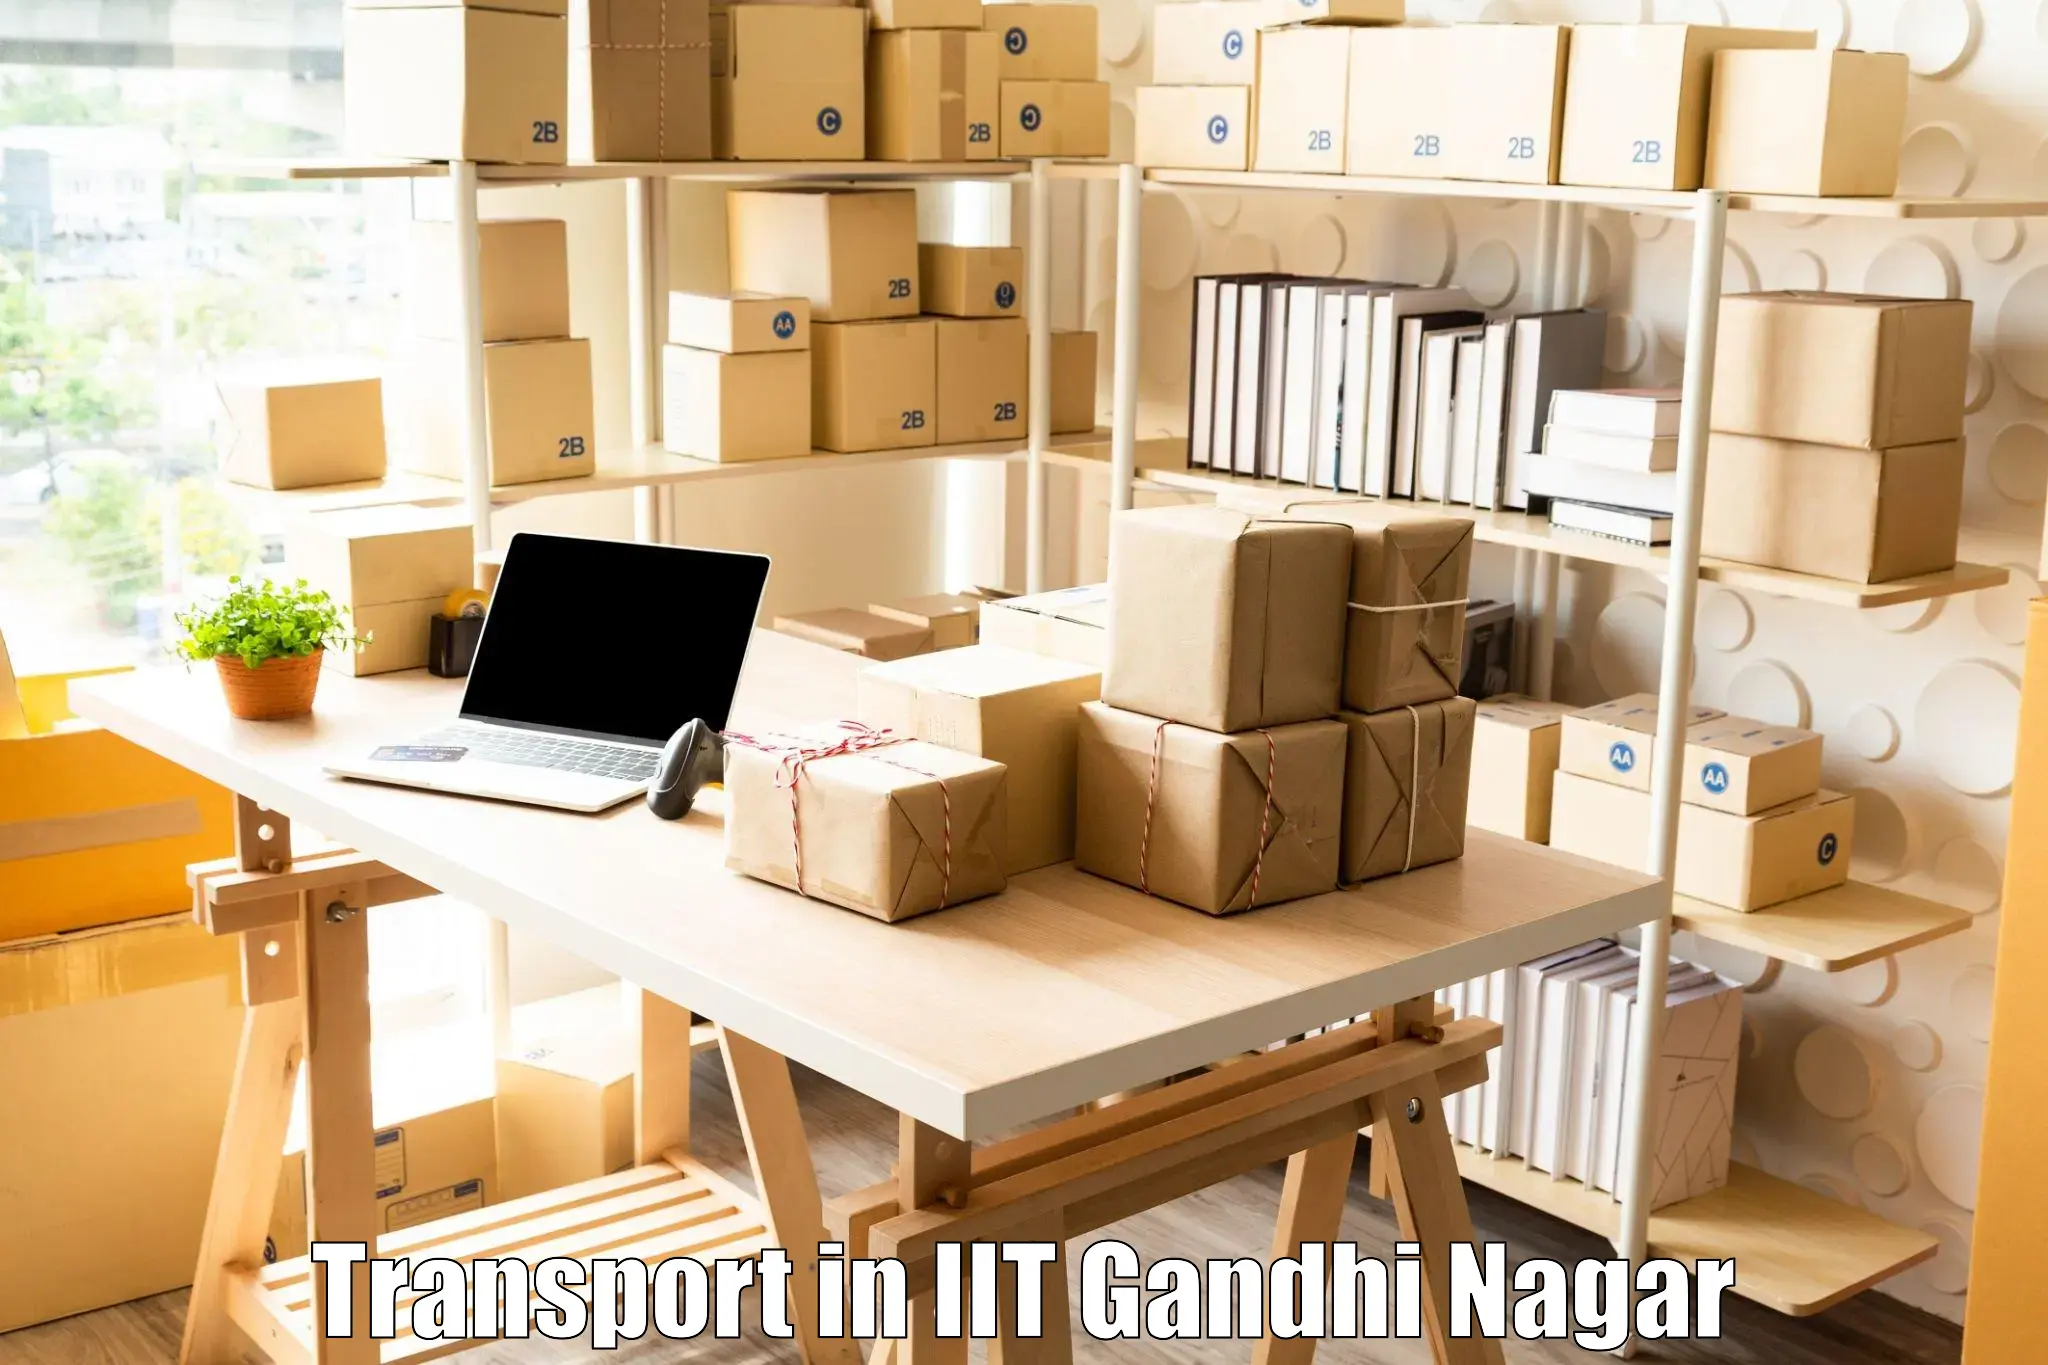 Daily transport service in IIT Gandhi Nagar